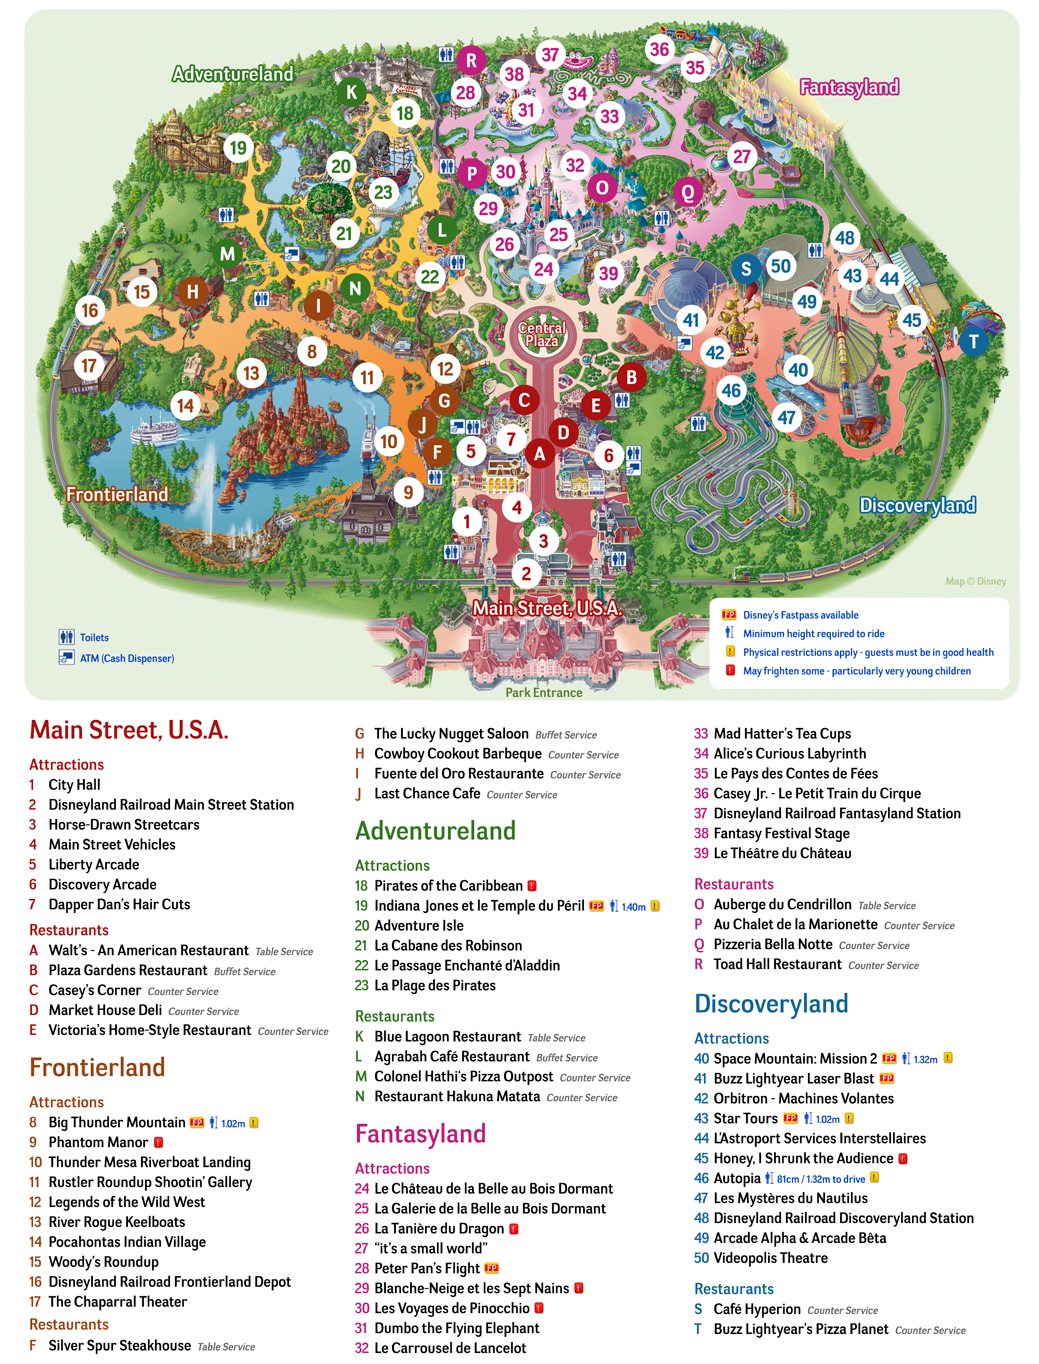 Plan et carte de Disneyland Paris et Walt Disney Studios